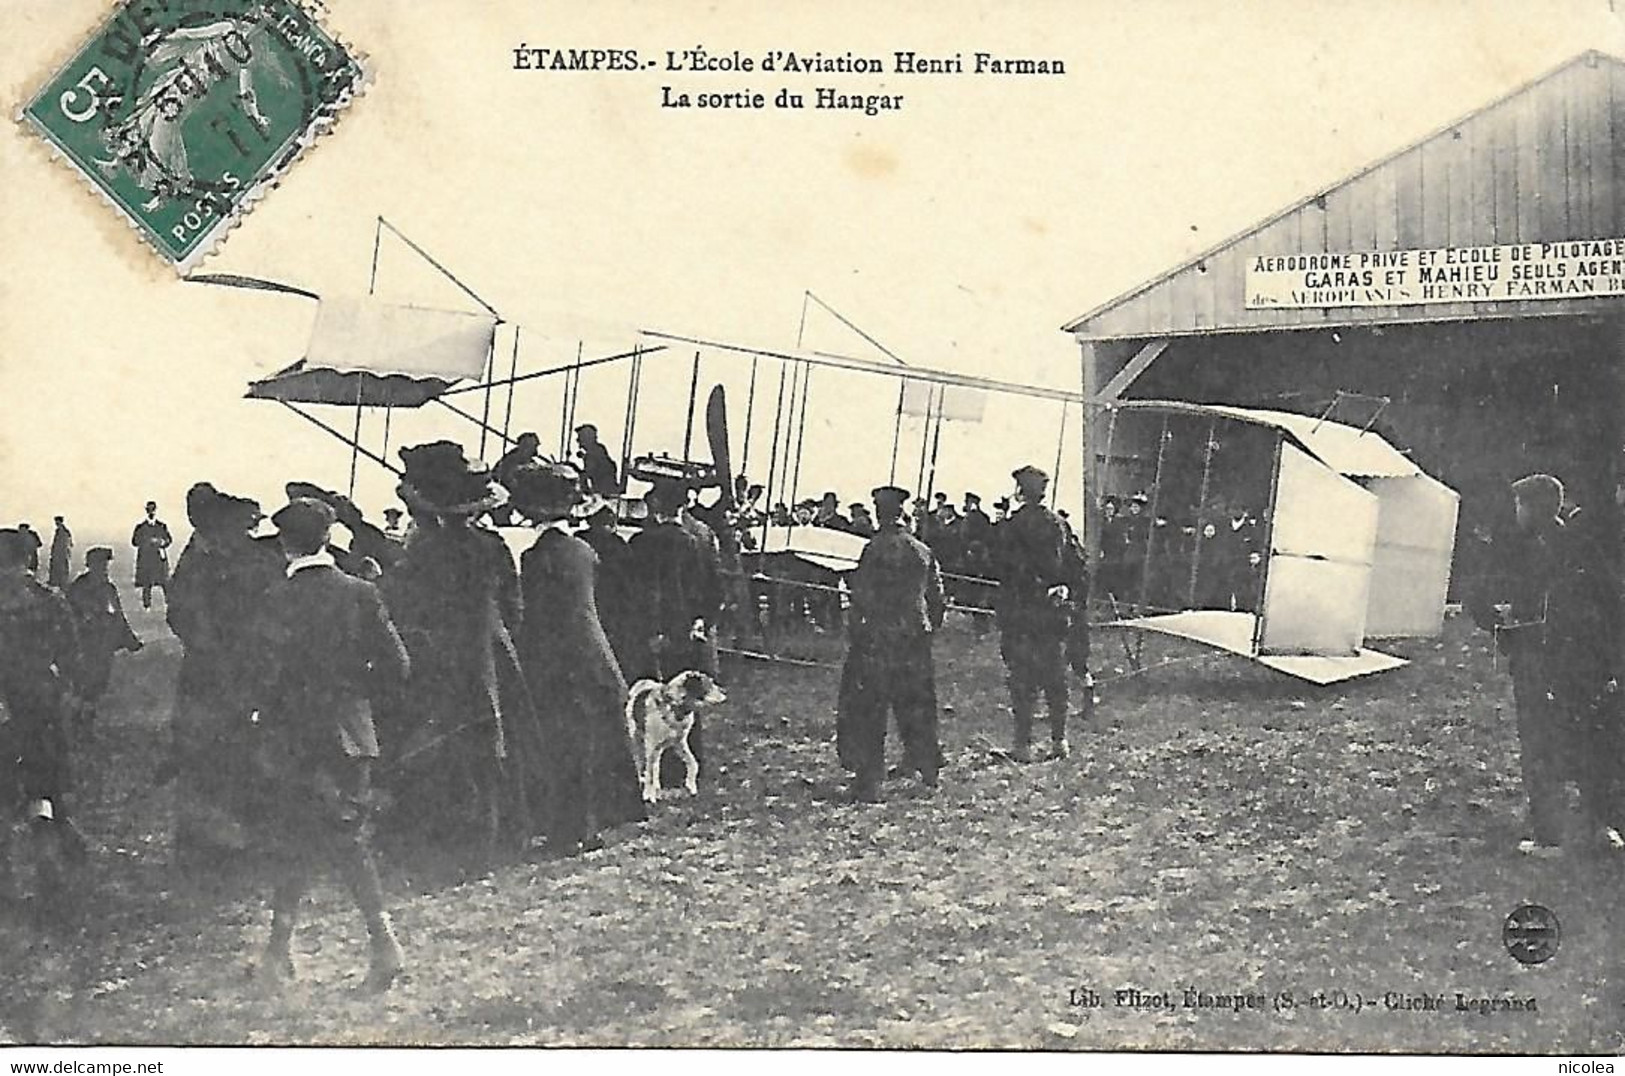 91 - ETAMPES - AERODROME PRIVE ECOLE DE PILOTAGE GARAS ET MAHIEU SEULS AGENTS DES AEROPLANES HENRI FARMAN 1911 - Vliegvelden